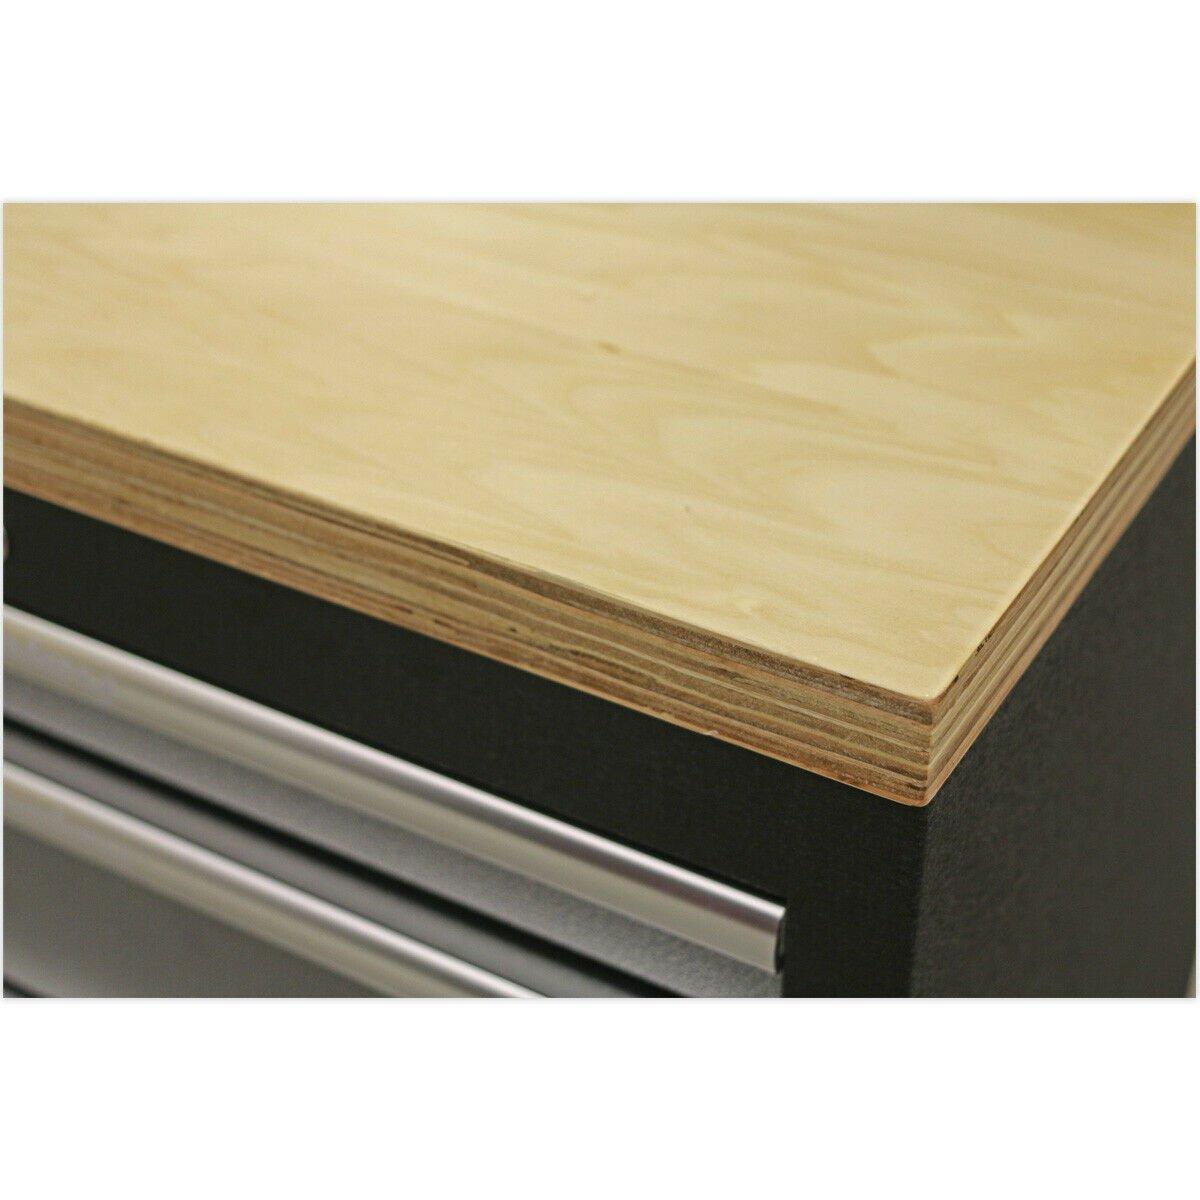 2040mm Pressed Wood Worktop for ys02633 ys02634 ys02639 & ys02641 Cabinets